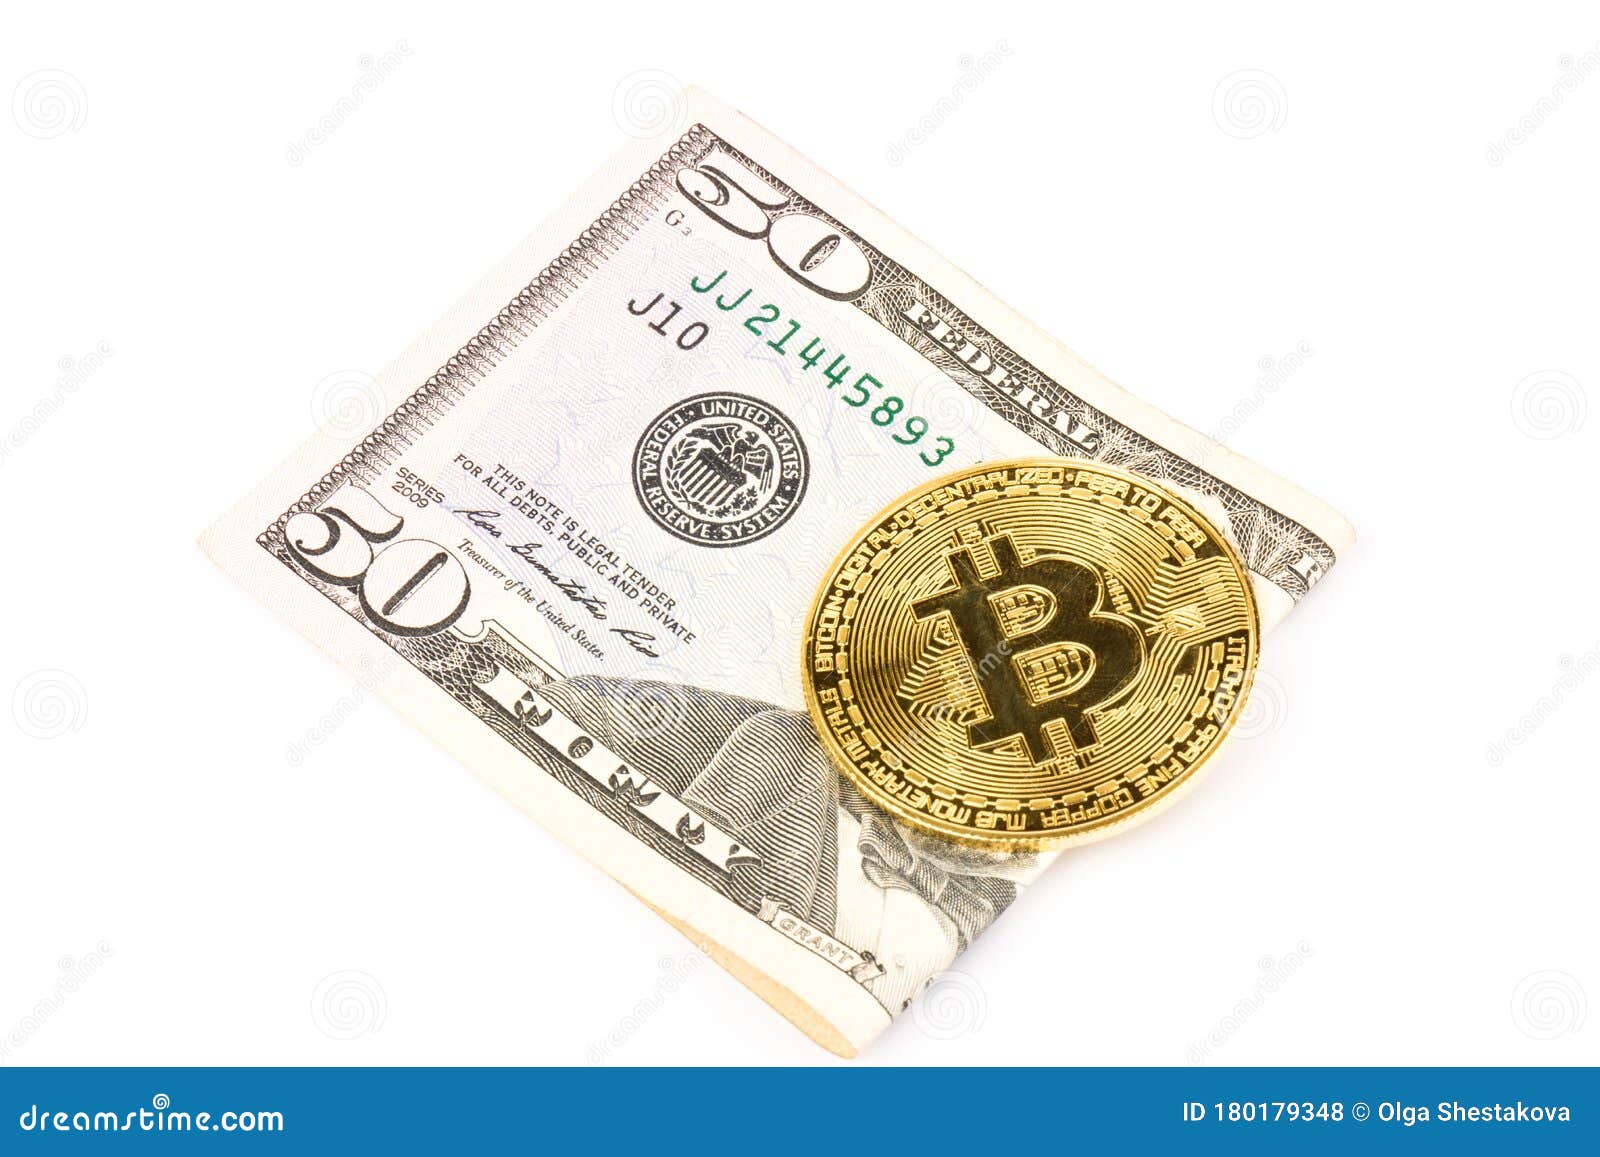 5 dollars of bitcoin